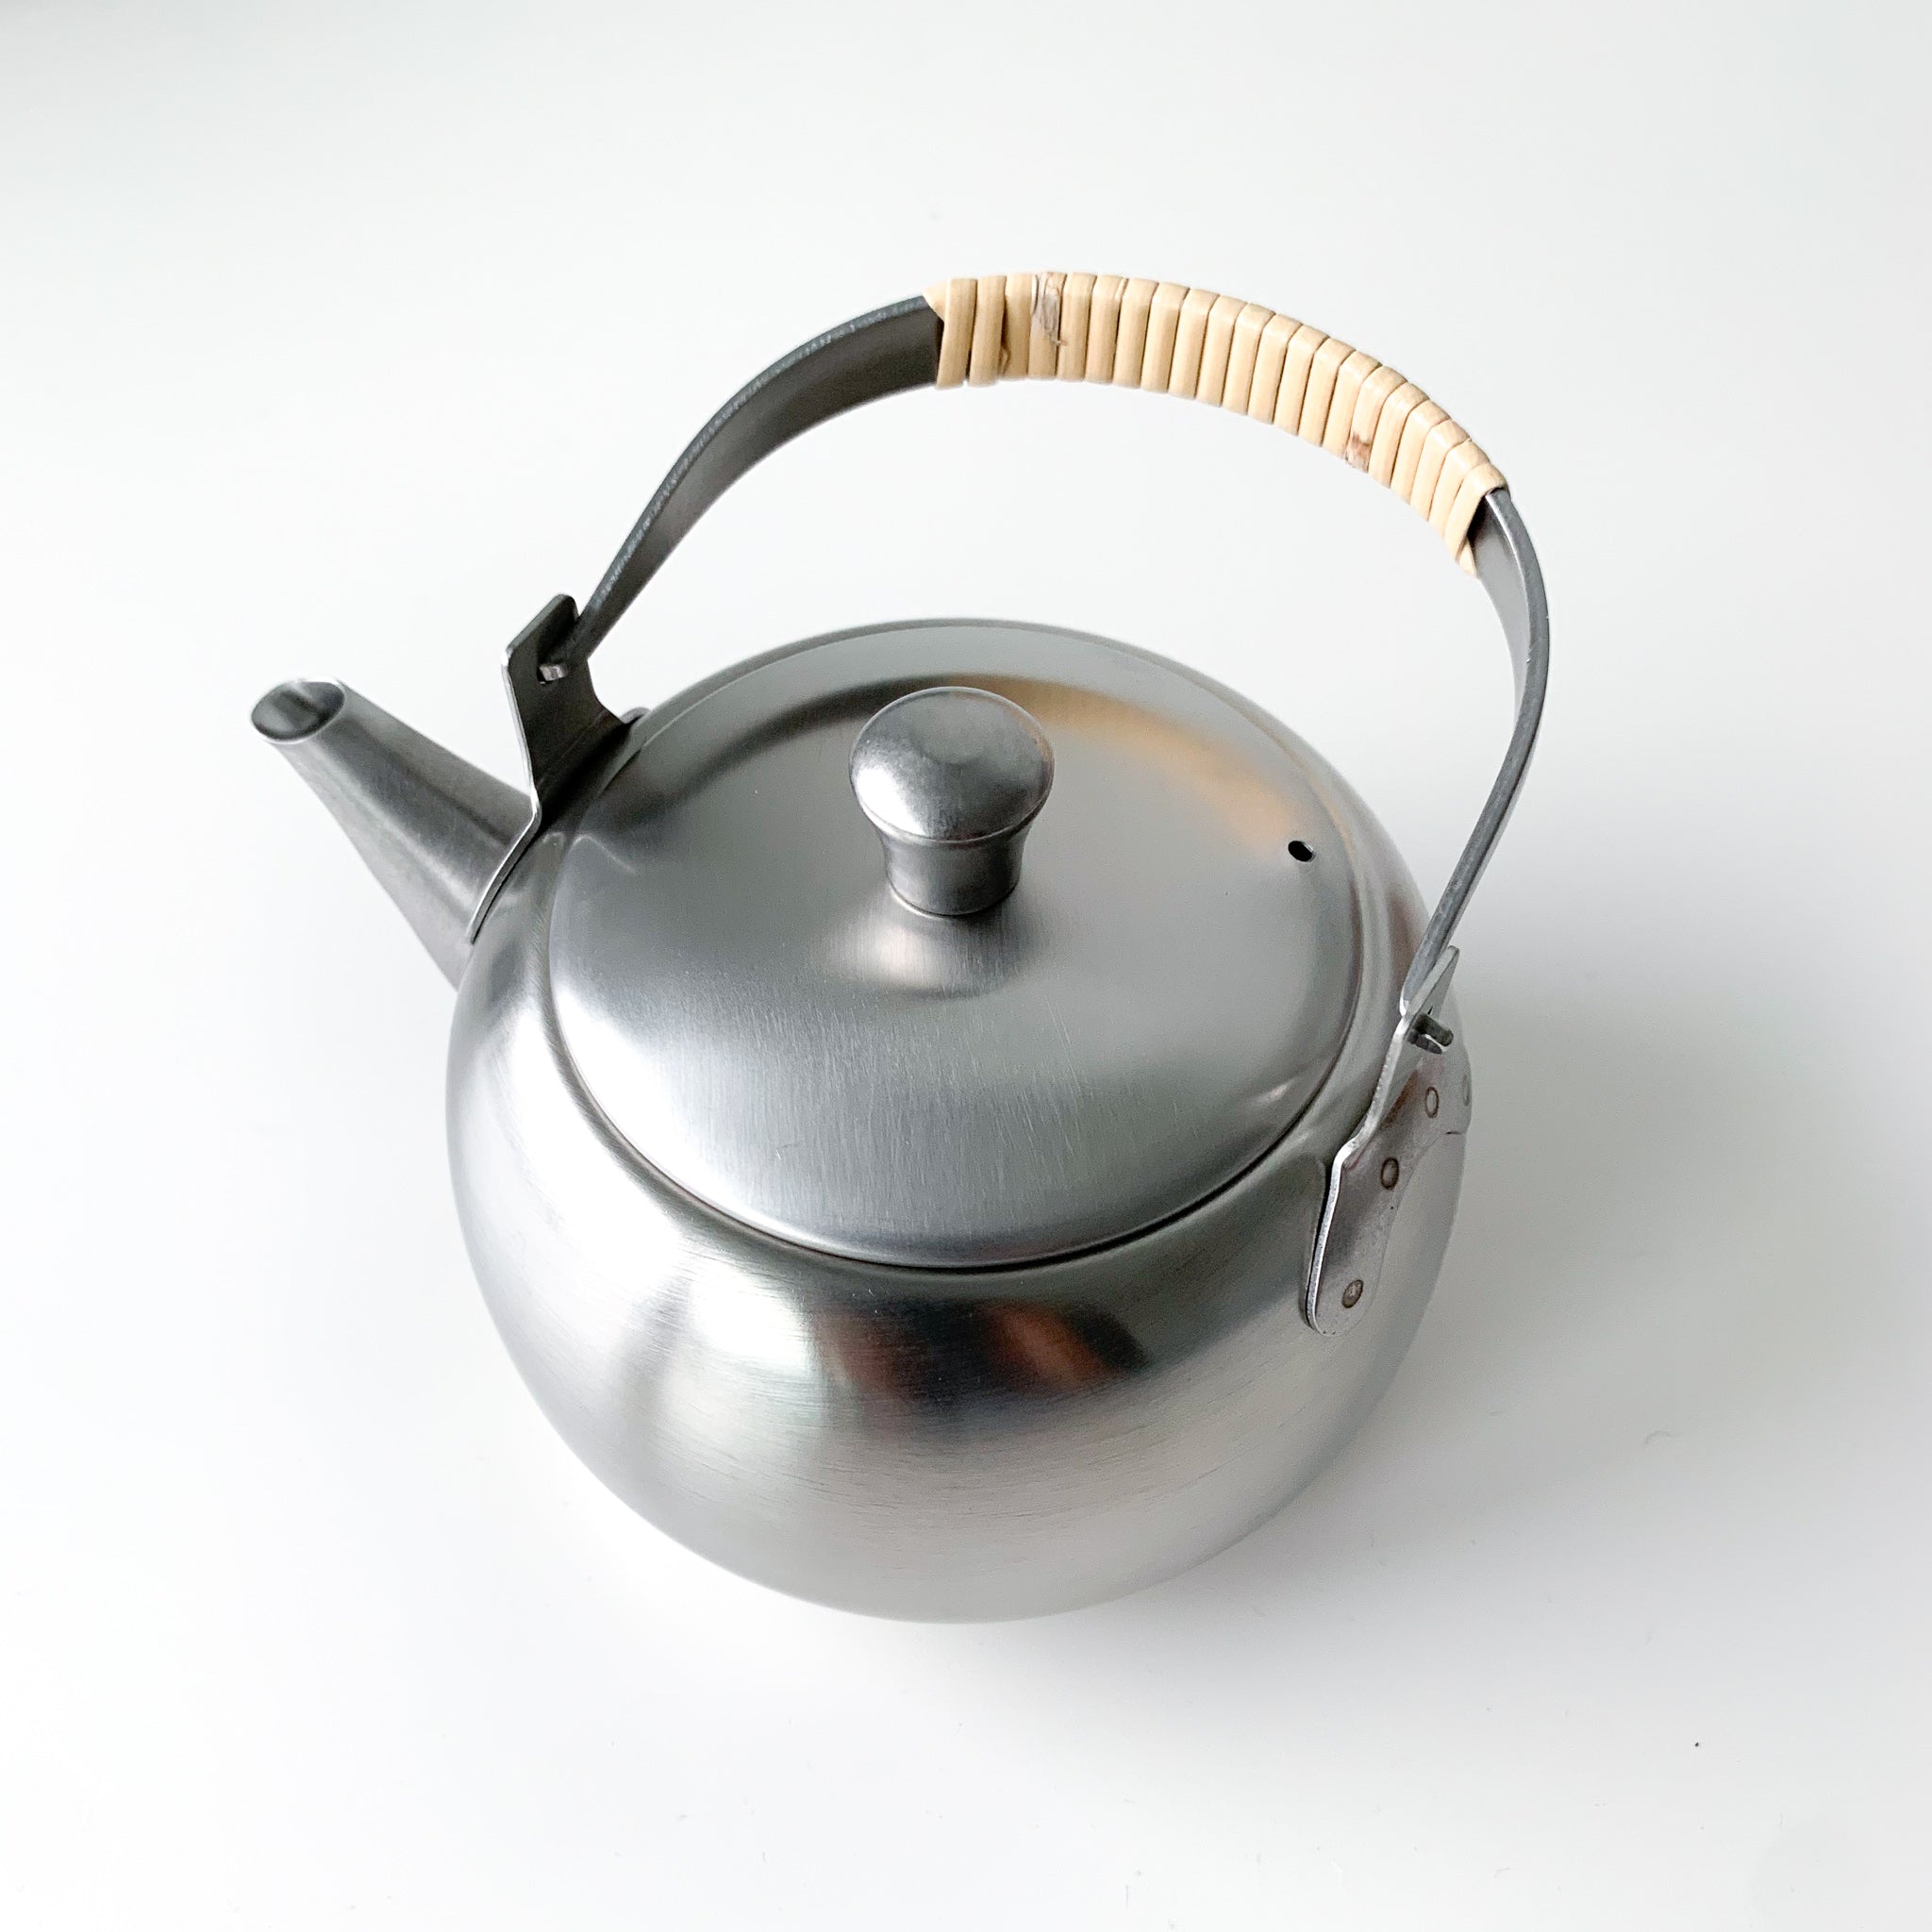 Yoshikawa Teapot Stainless Steel 500ml Tsurute Midori Made in Japan Yj2892